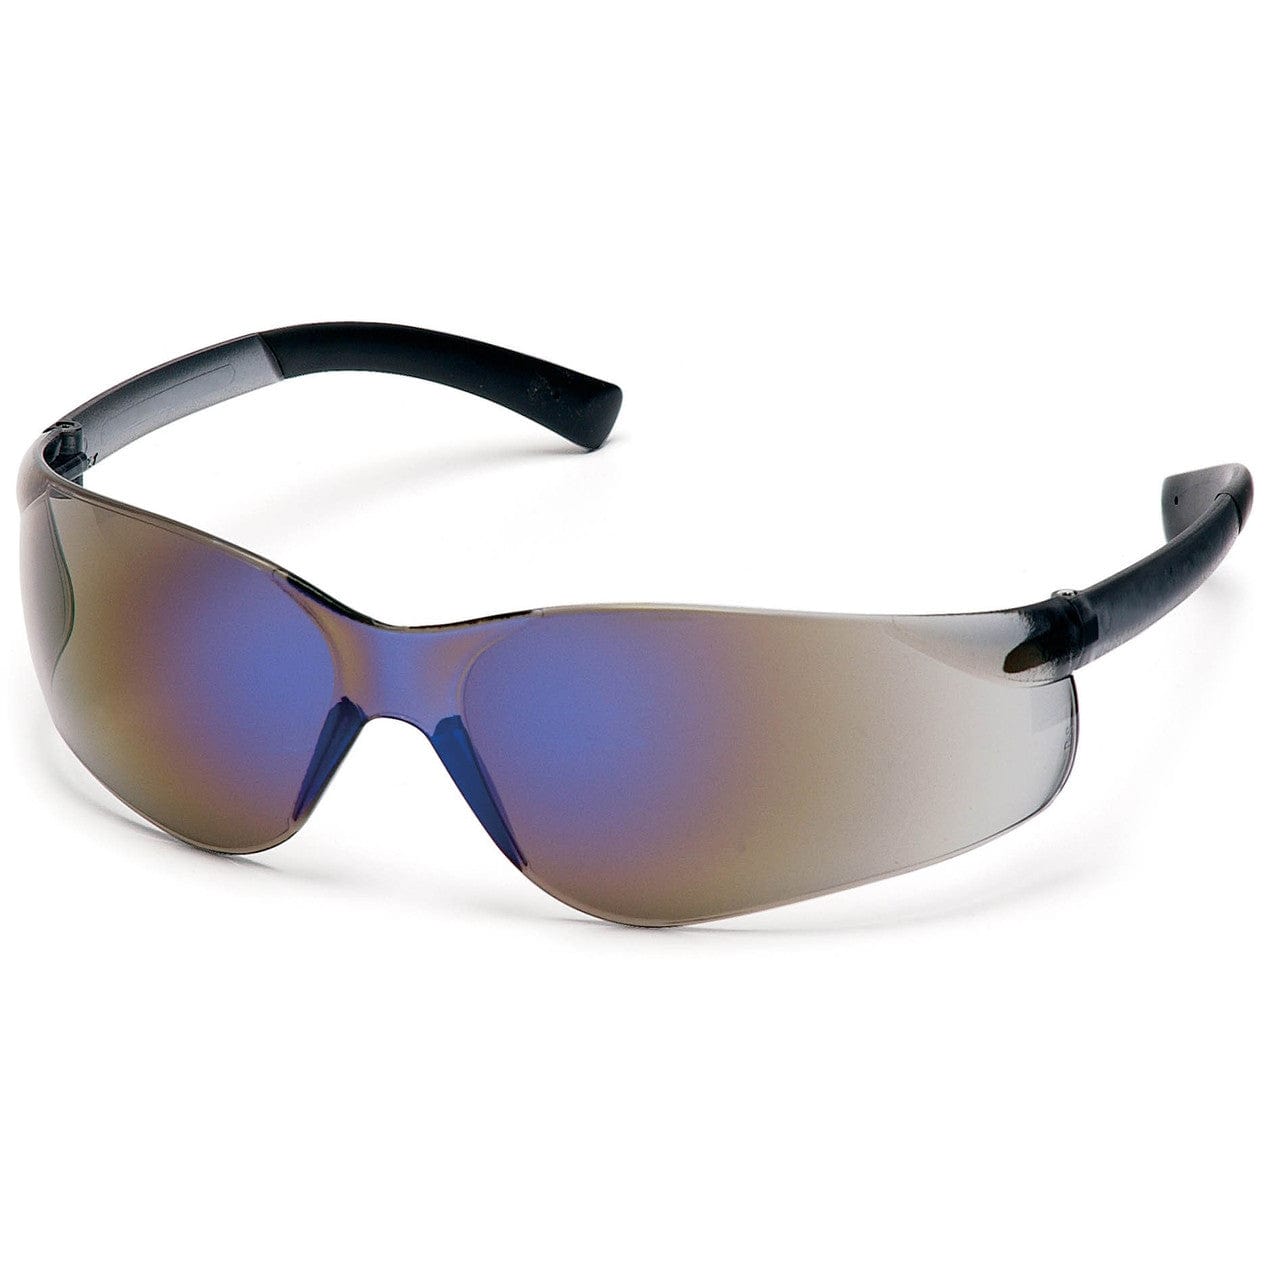 Pyramex Ztek Safety Glasses with Blue Mirror Lens S2575S